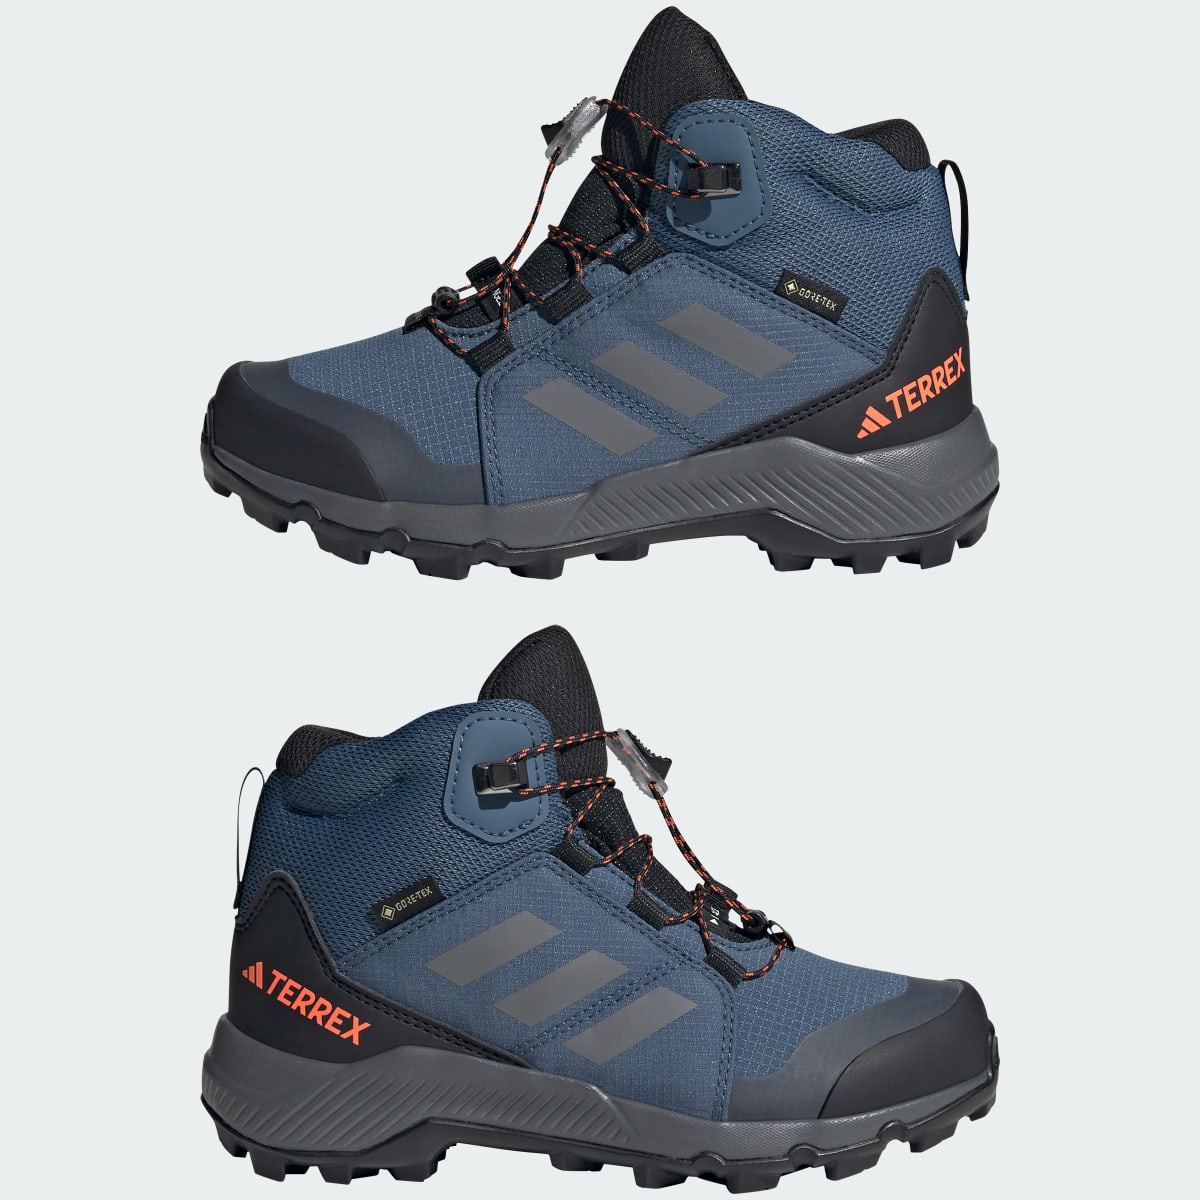 Adidas Chaussure de randonnée Organizer Mid GORE-TEX. 9